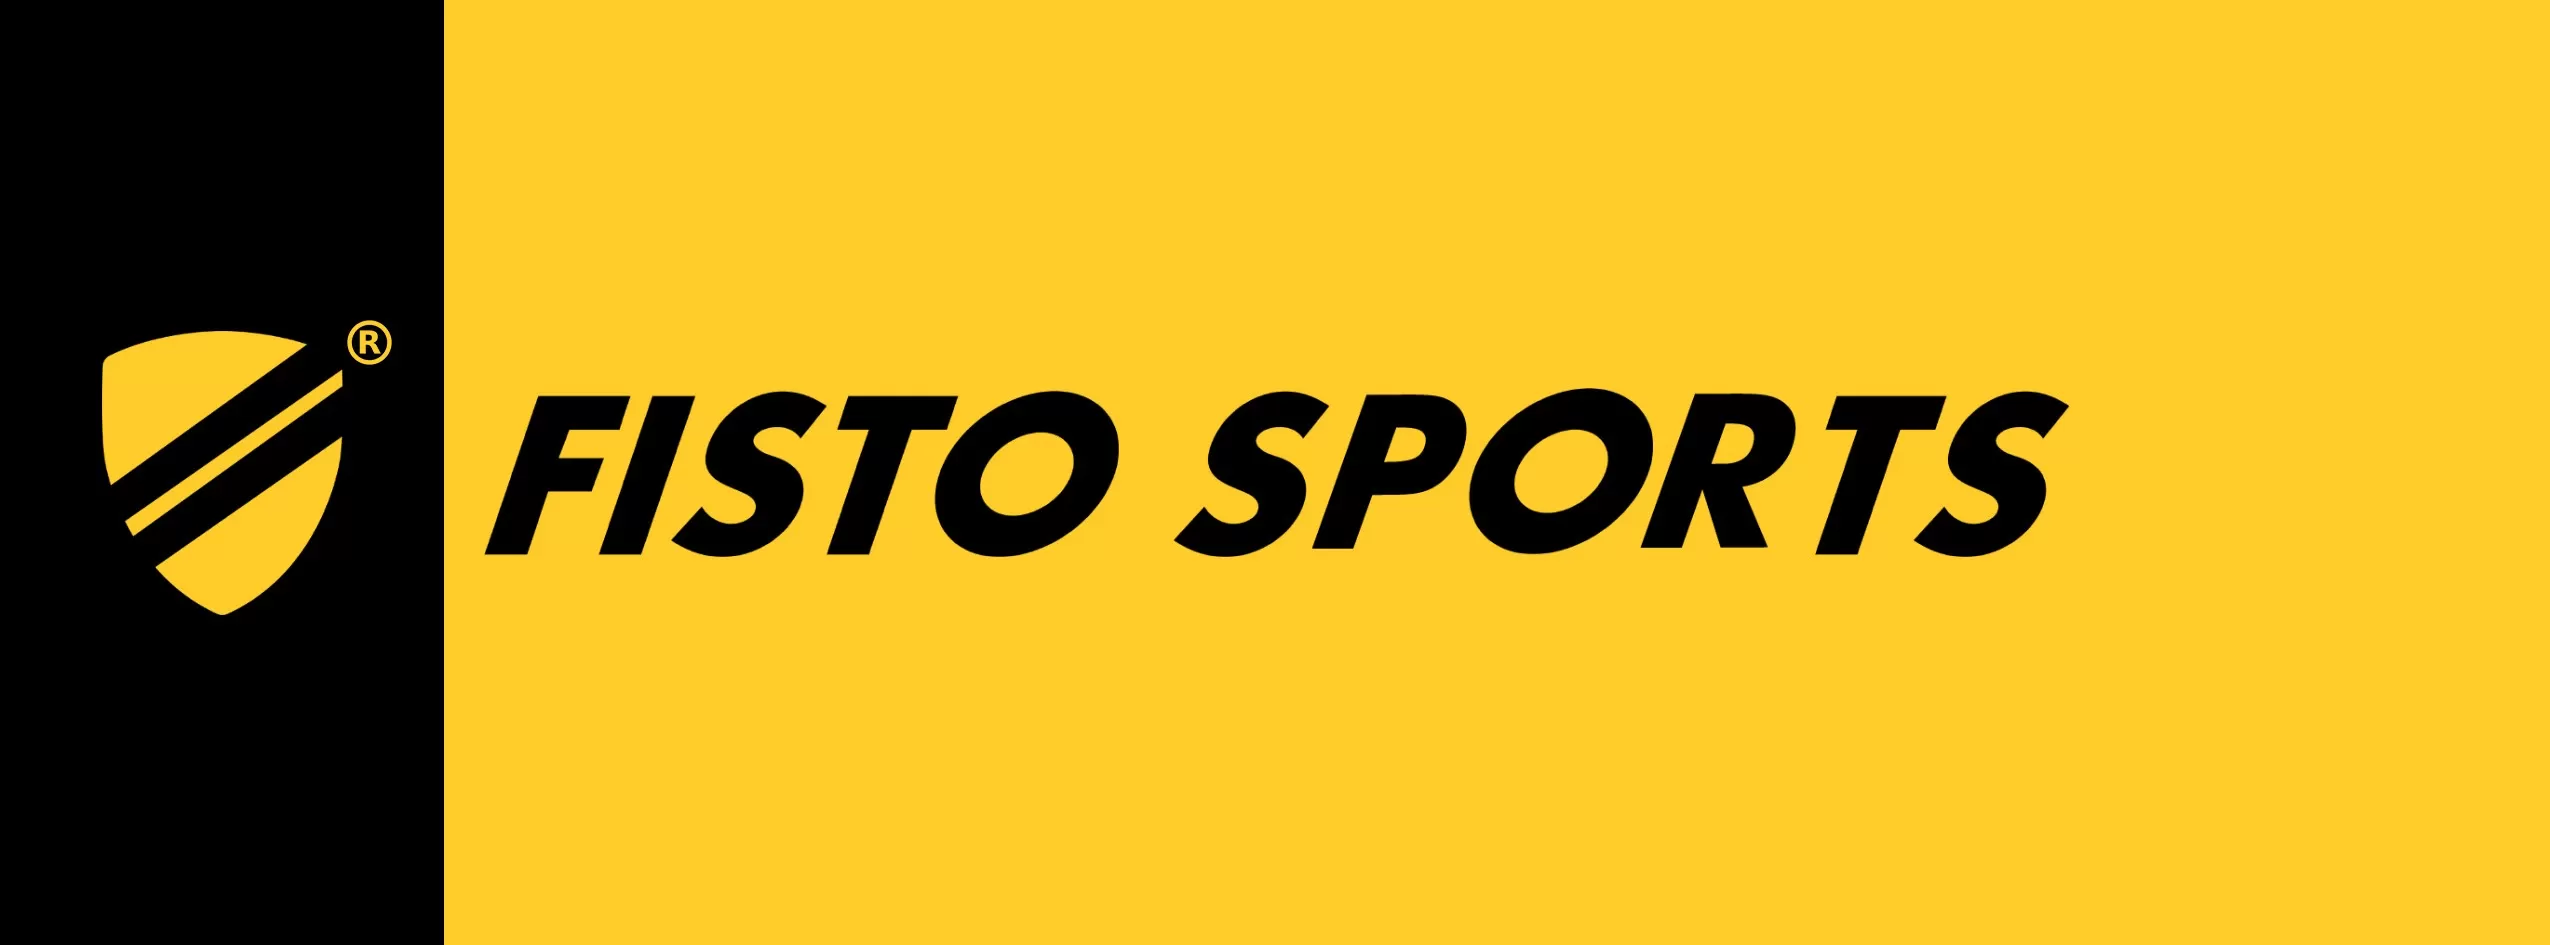 Digital Media Fisto Sports Advertising in India